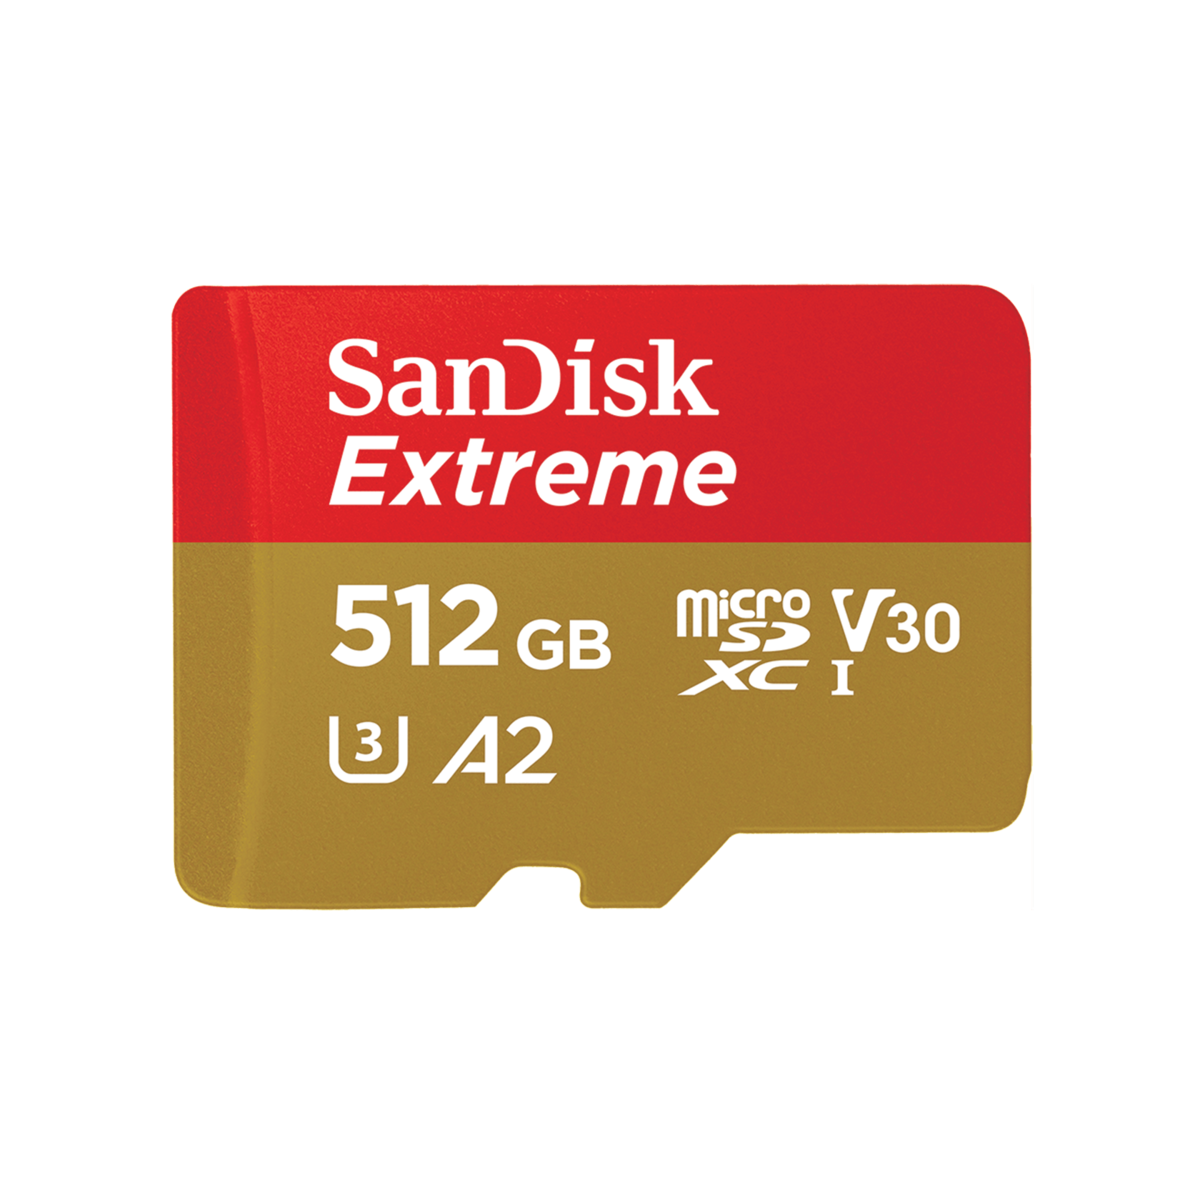 SanDisk Extreme MicroSD UHS-I Card 512GB